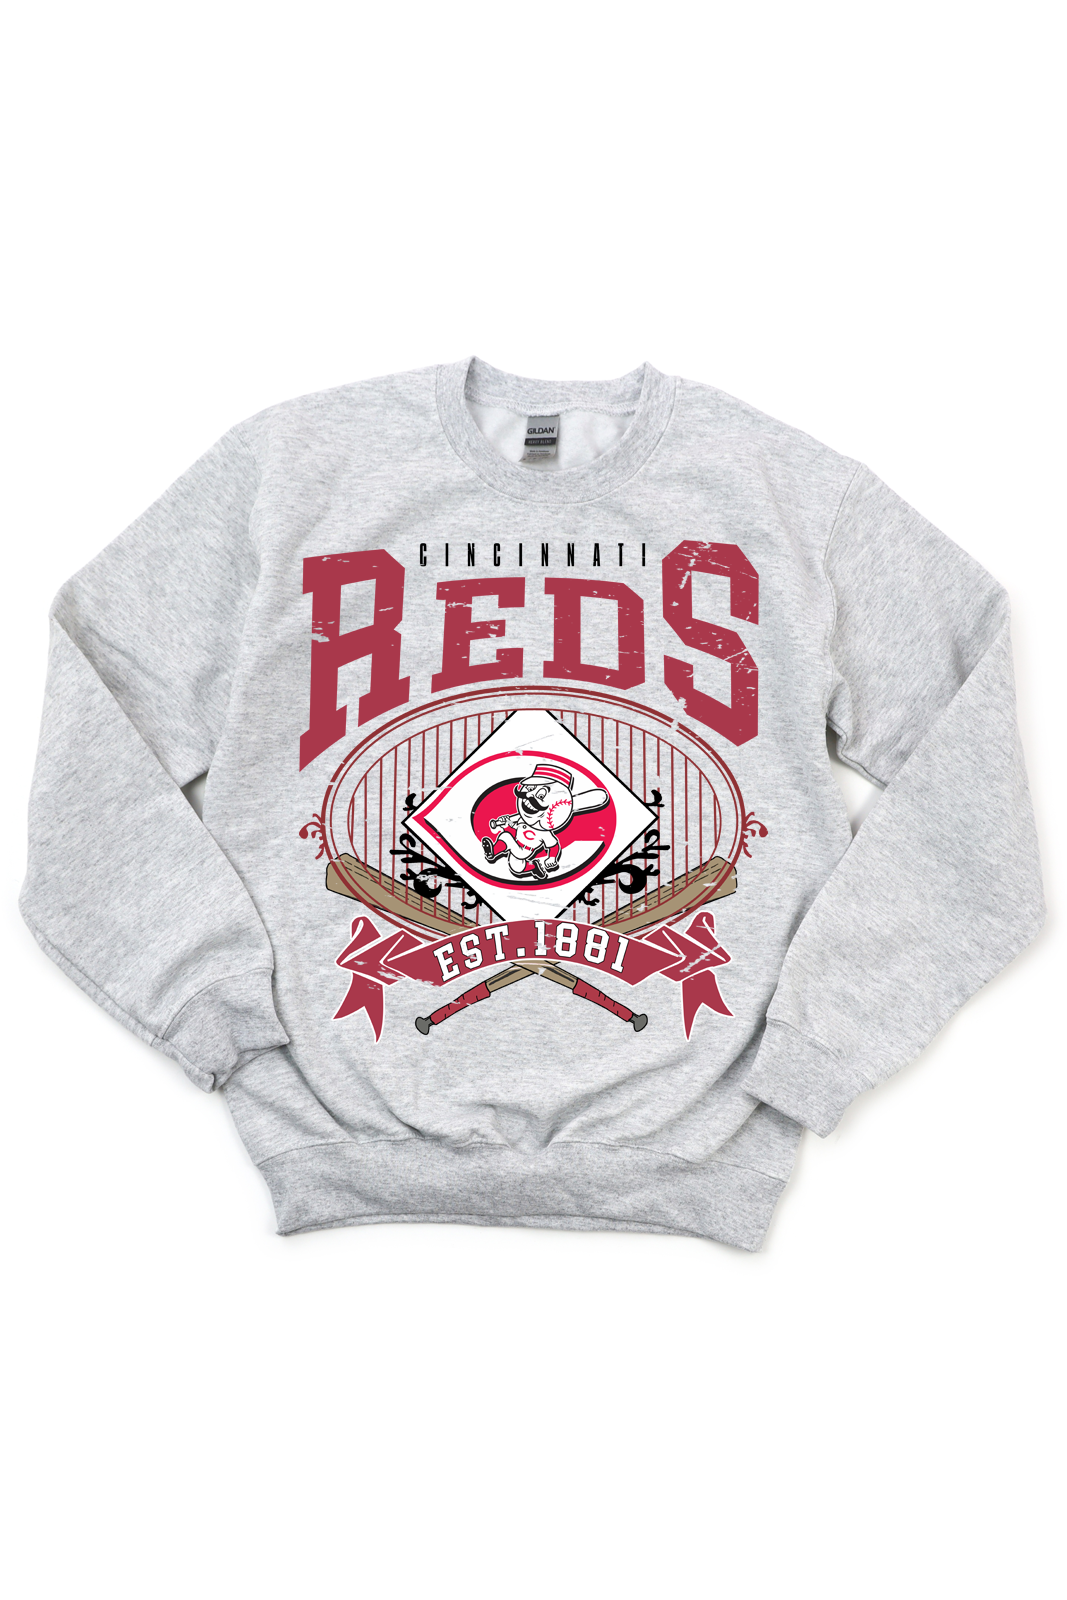 Vintage Reds Mascot Sweatshirt